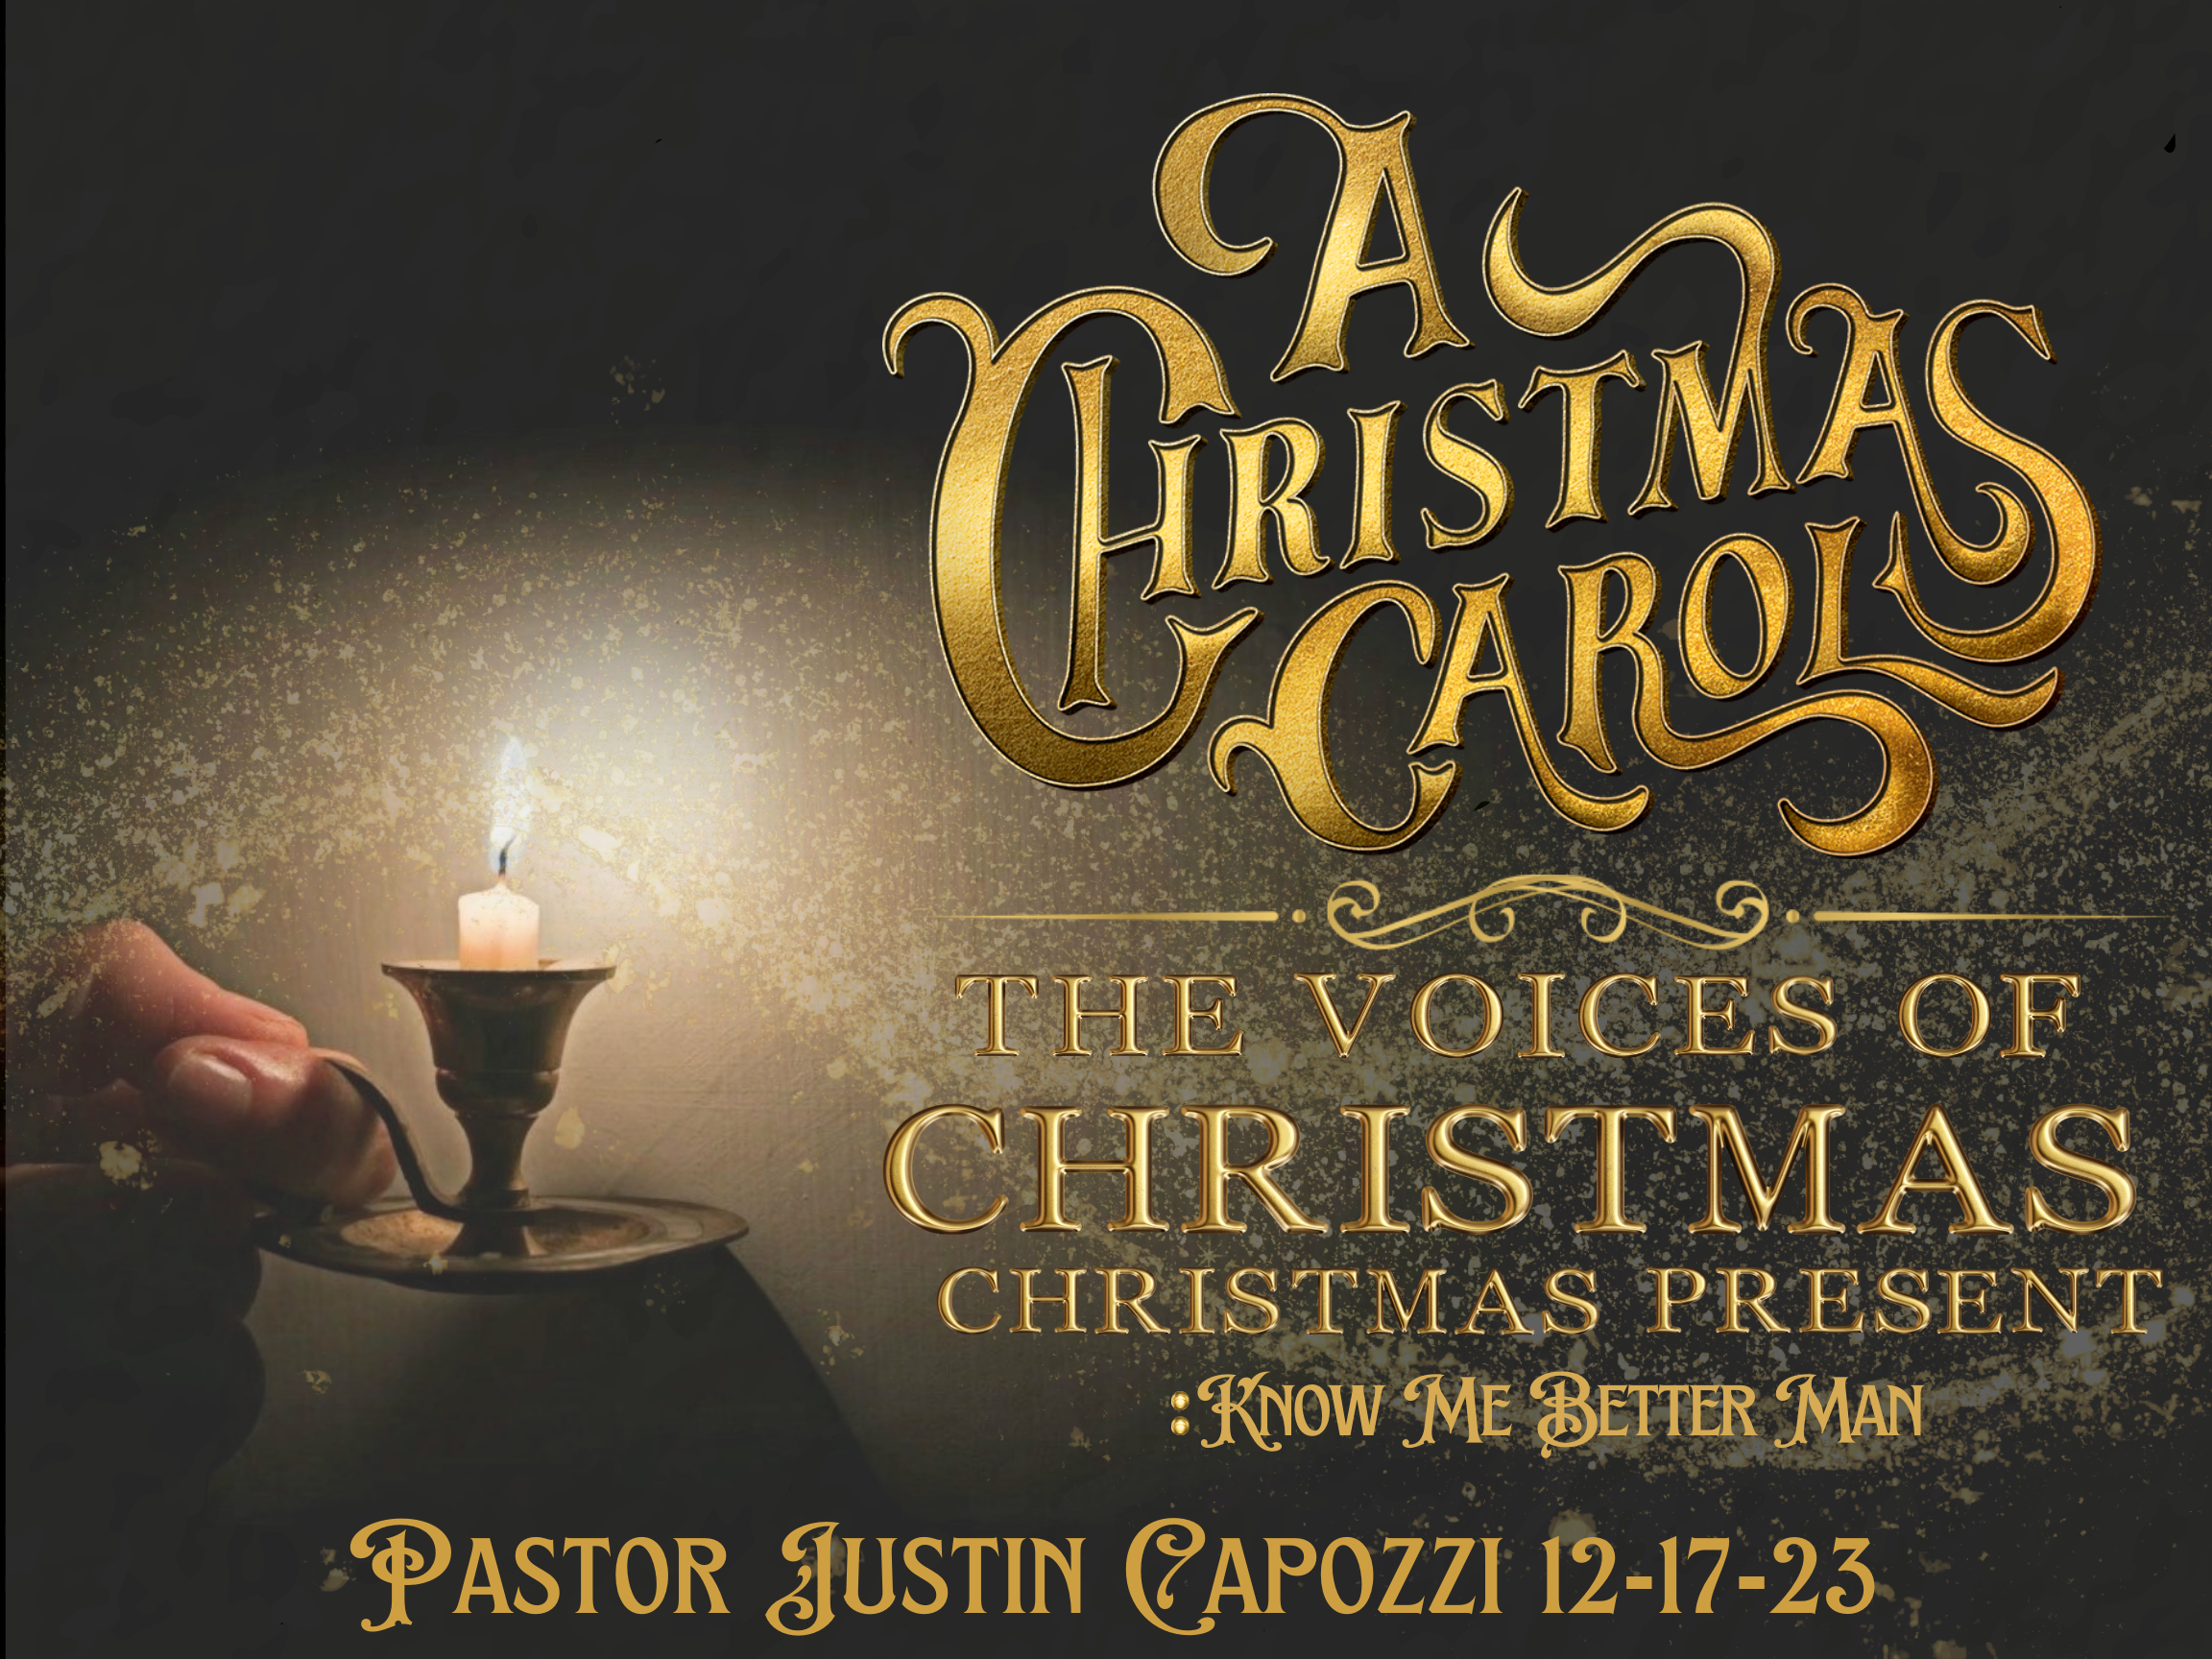 A Christmas Carol - The Voice of Christmas Present